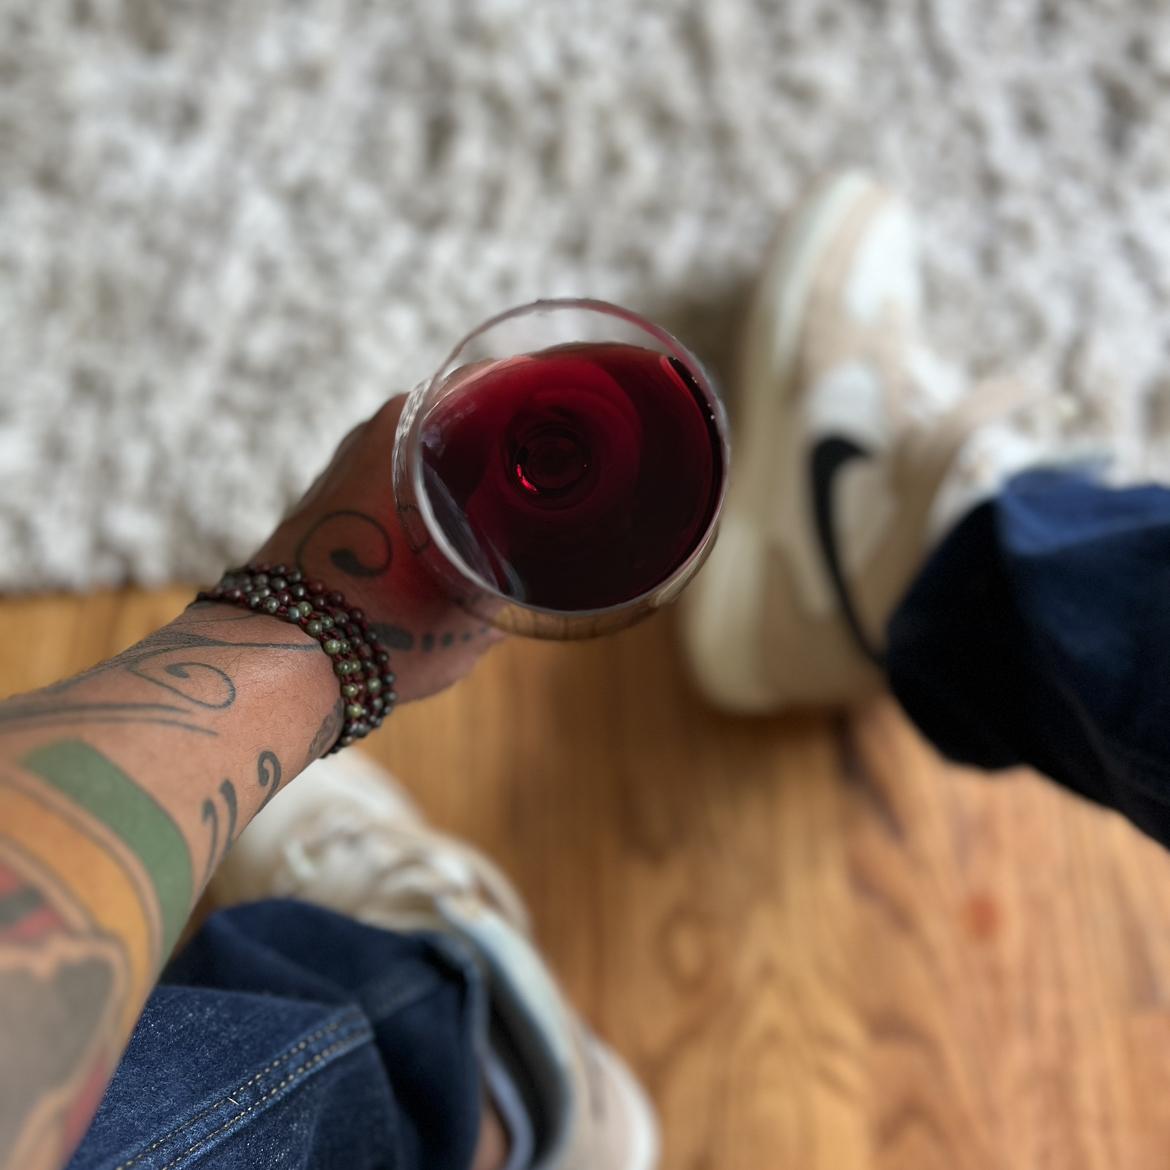 Wine + Kicks 's images